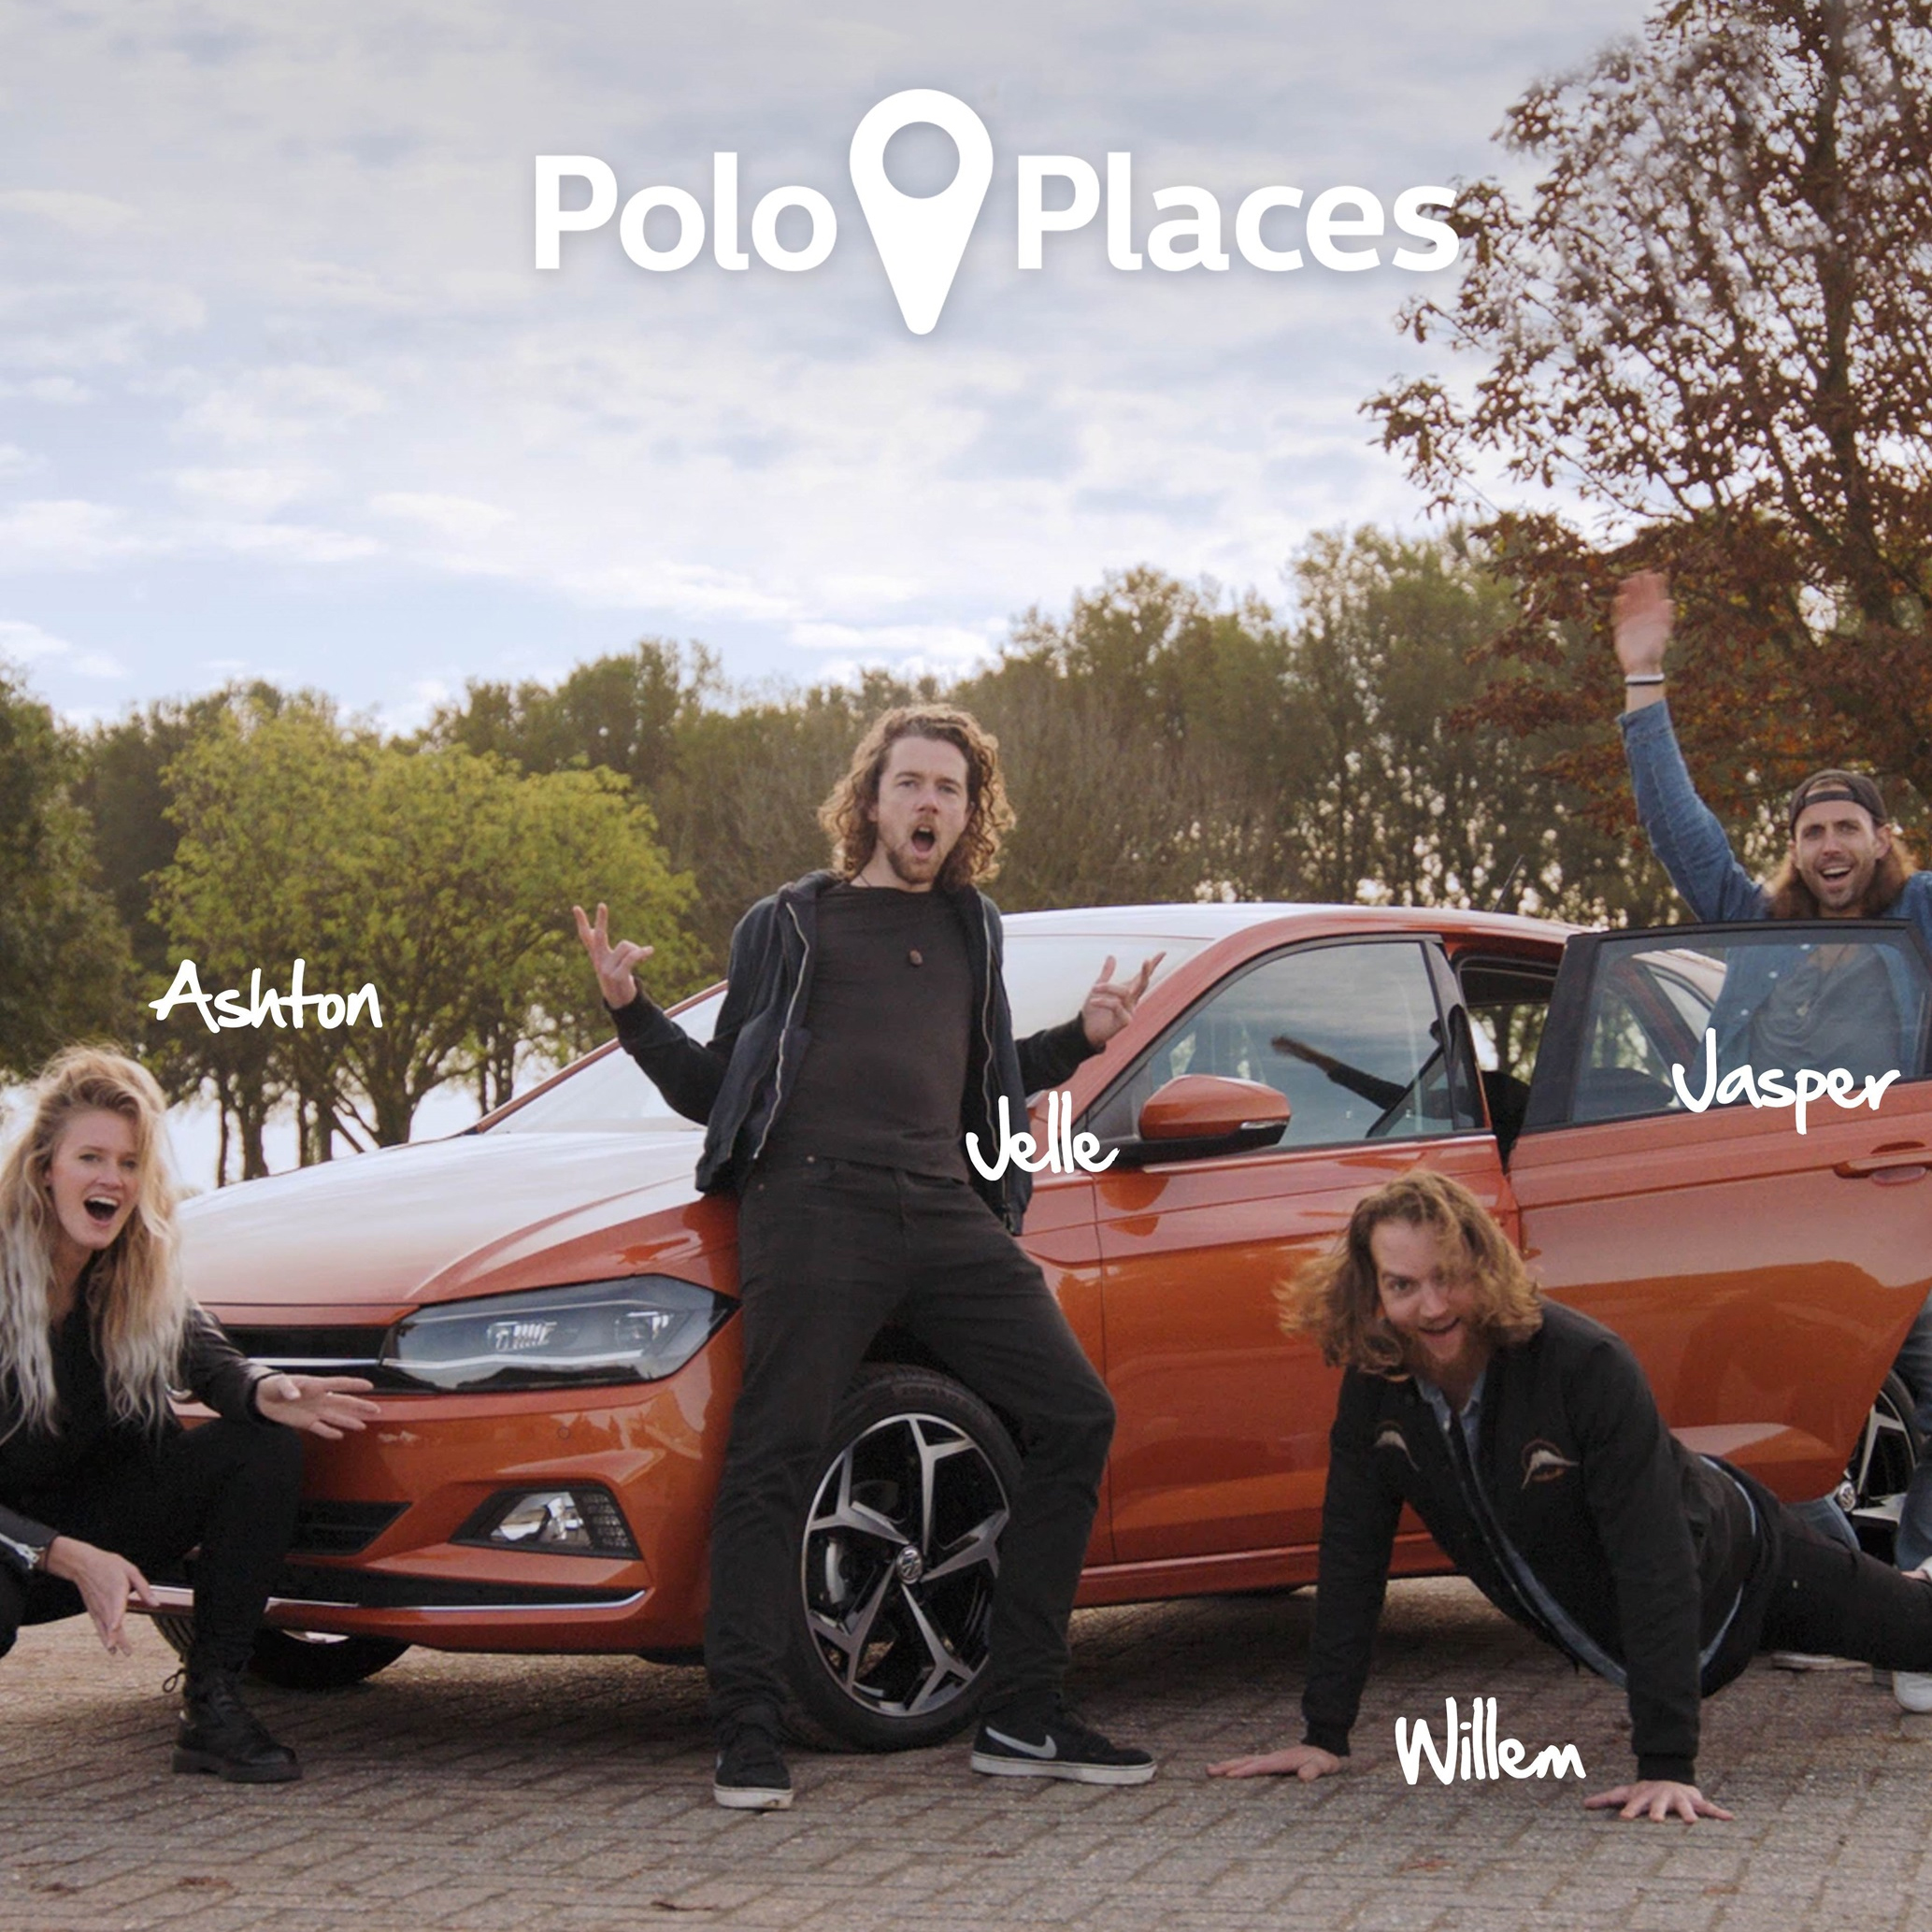 Polo Places